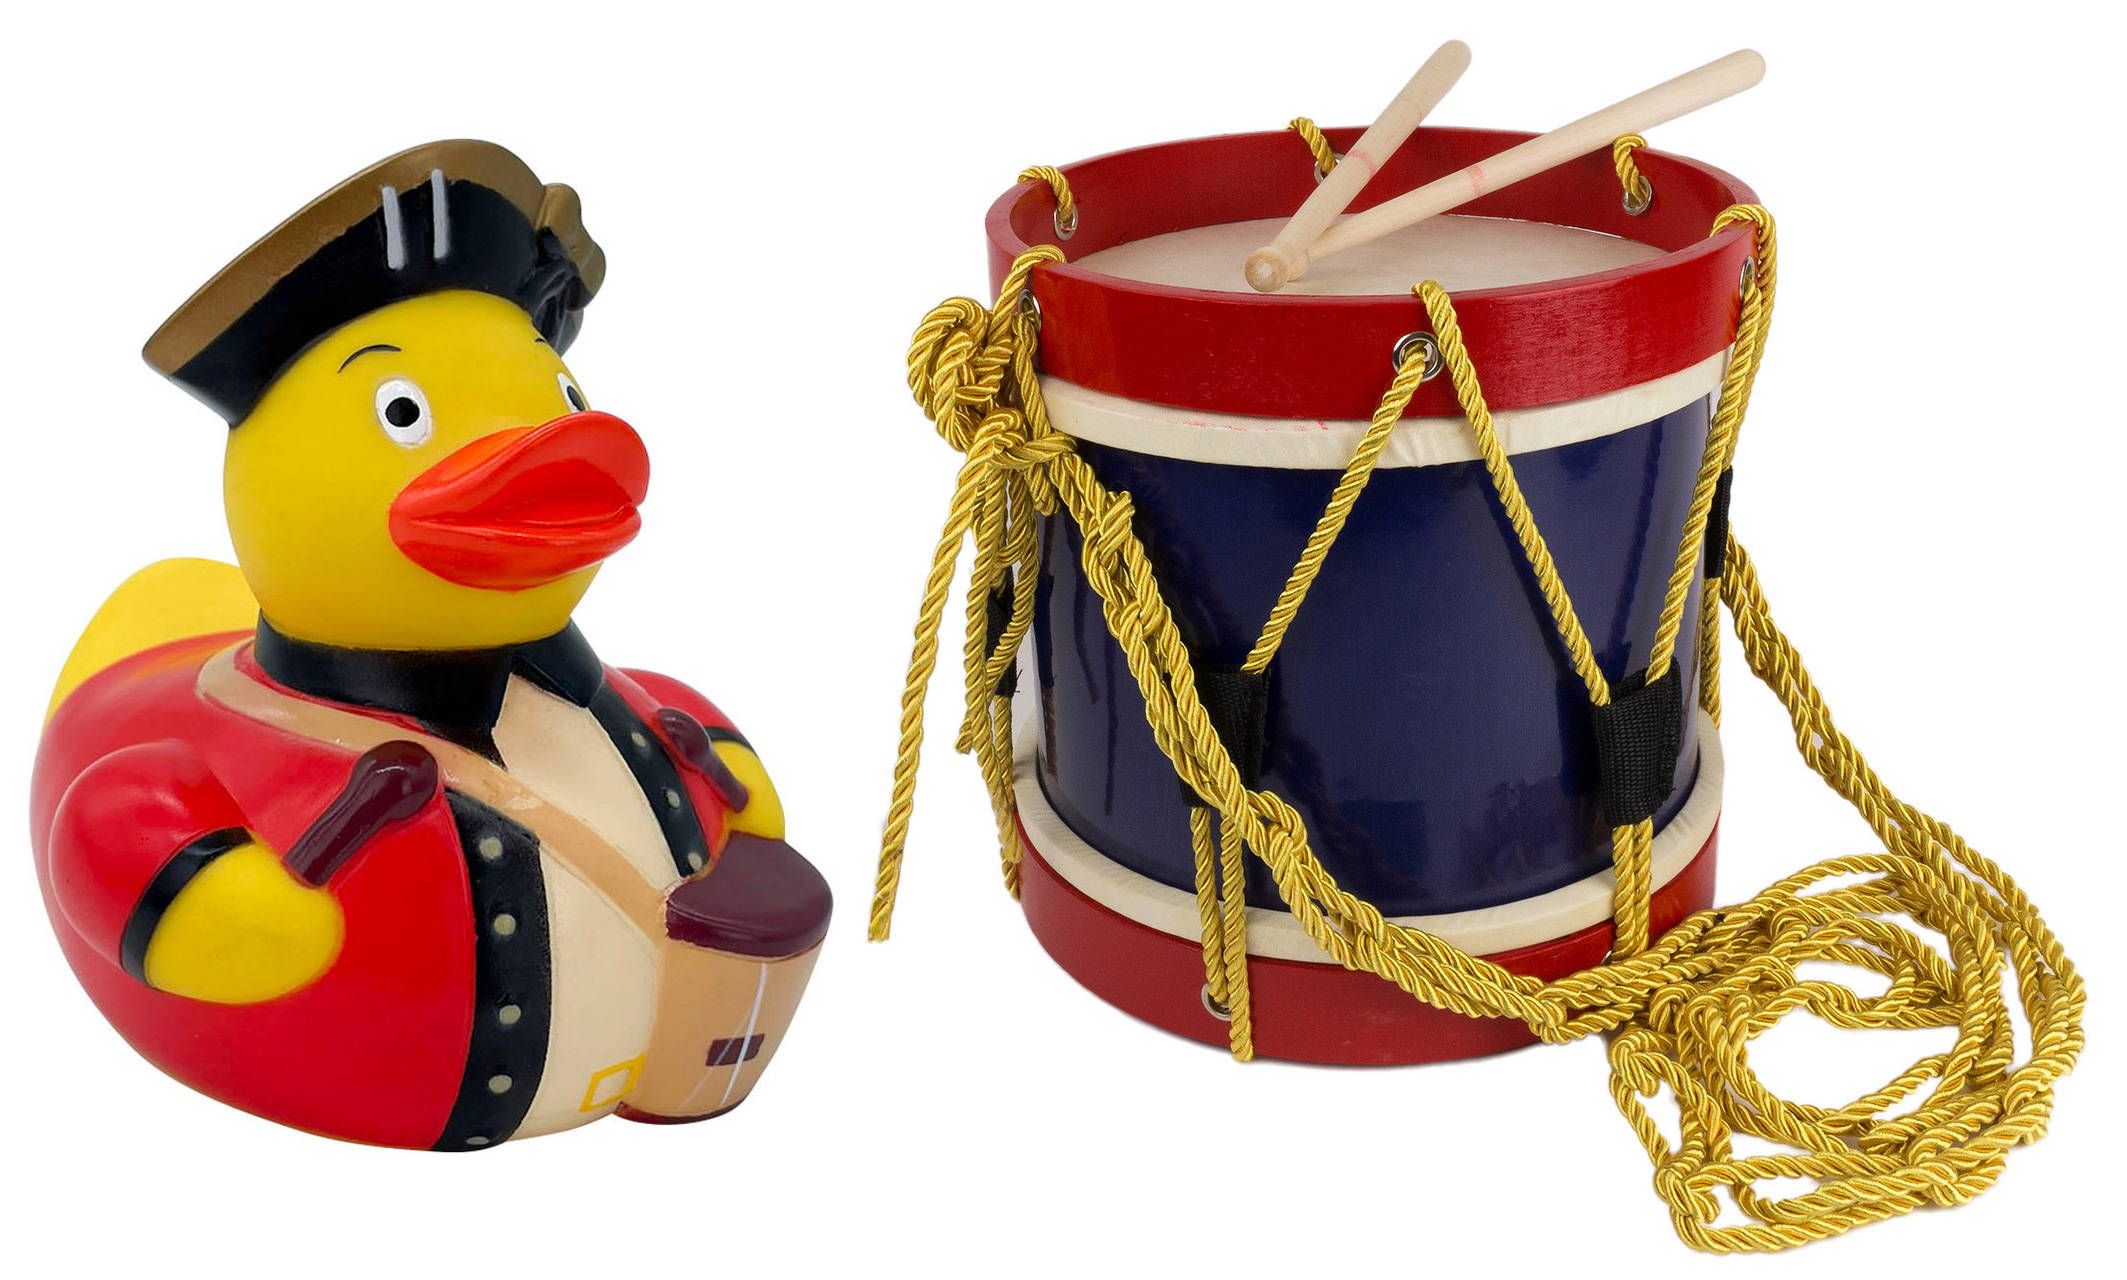 Drummer Rubber Duckie and Spirit of '76 Toy Drum